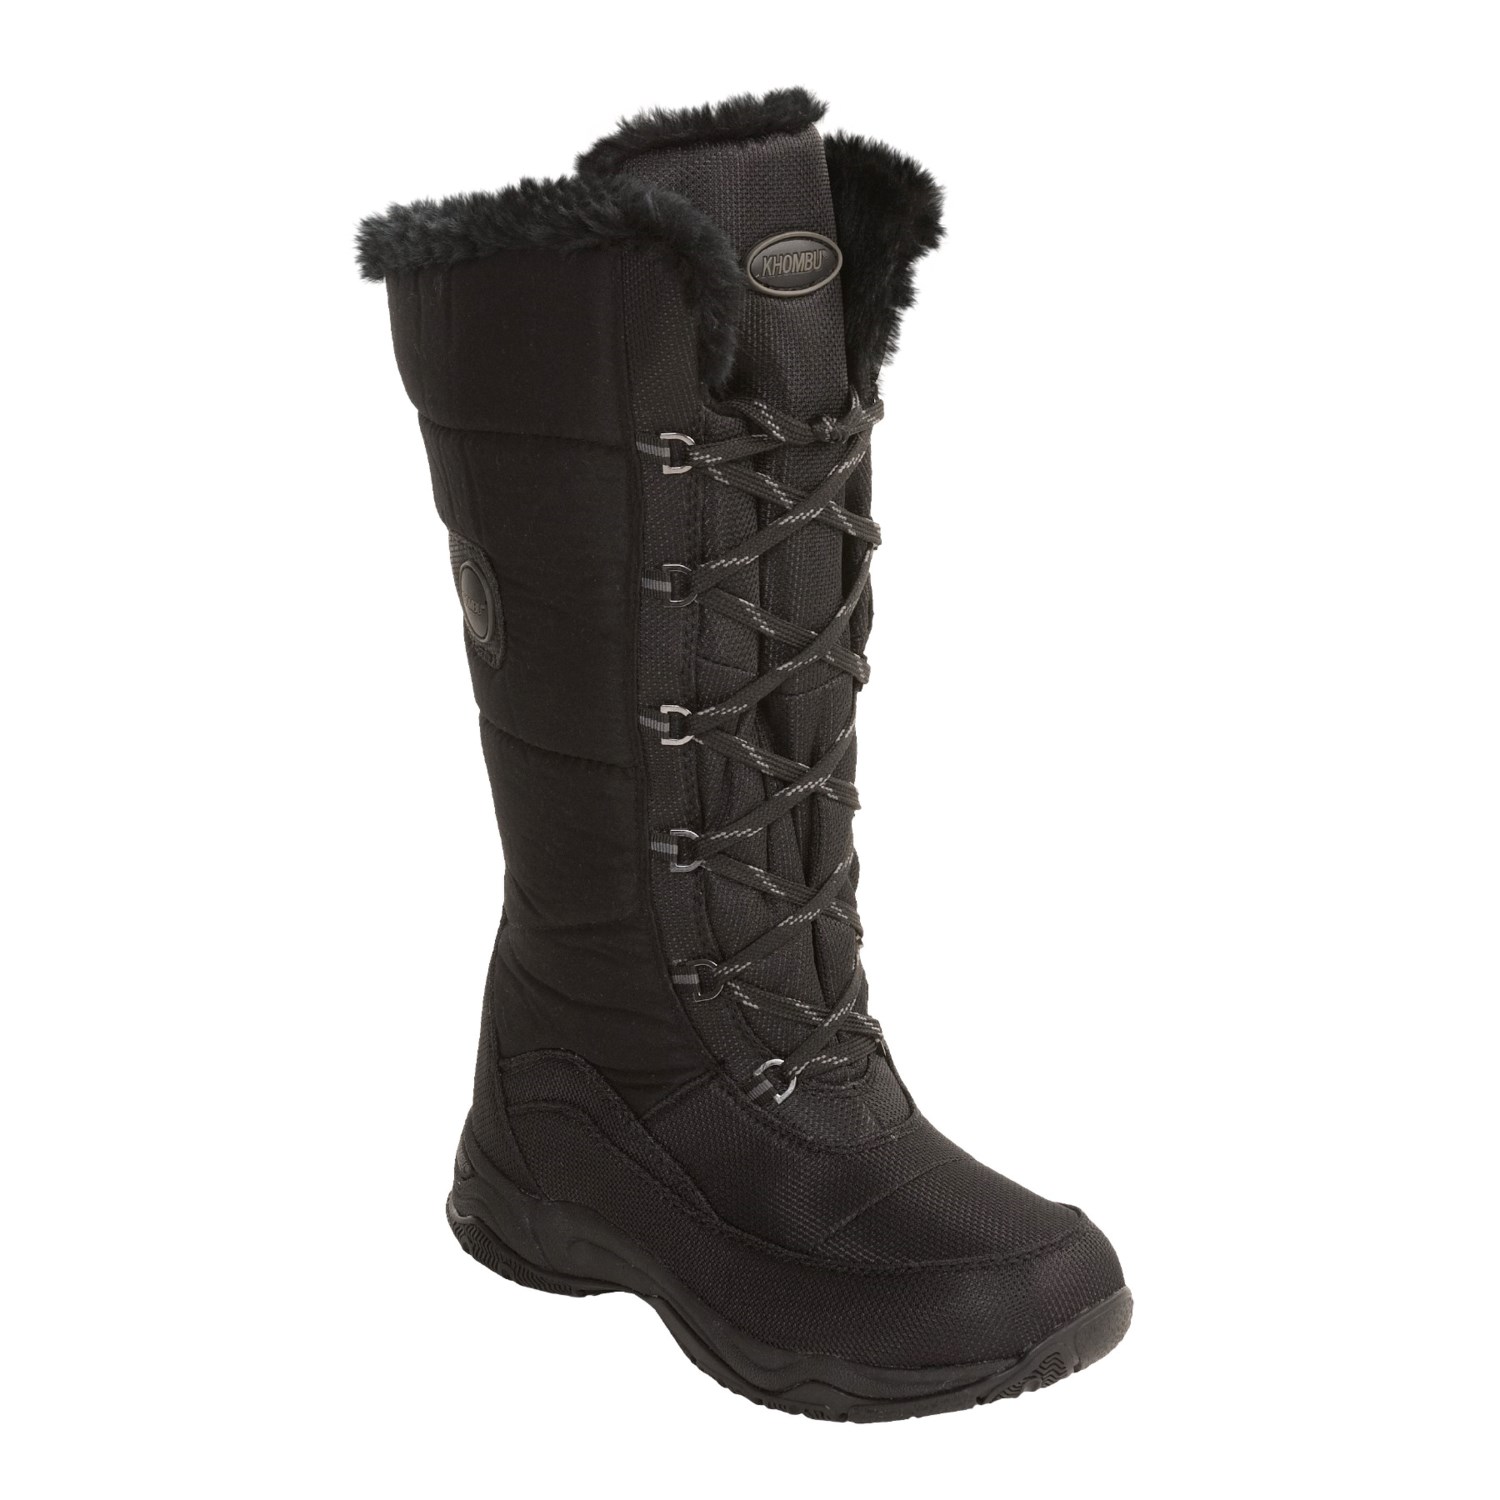 Khombu Tusk 2 Boots (For Women) 2821C - Save 36%